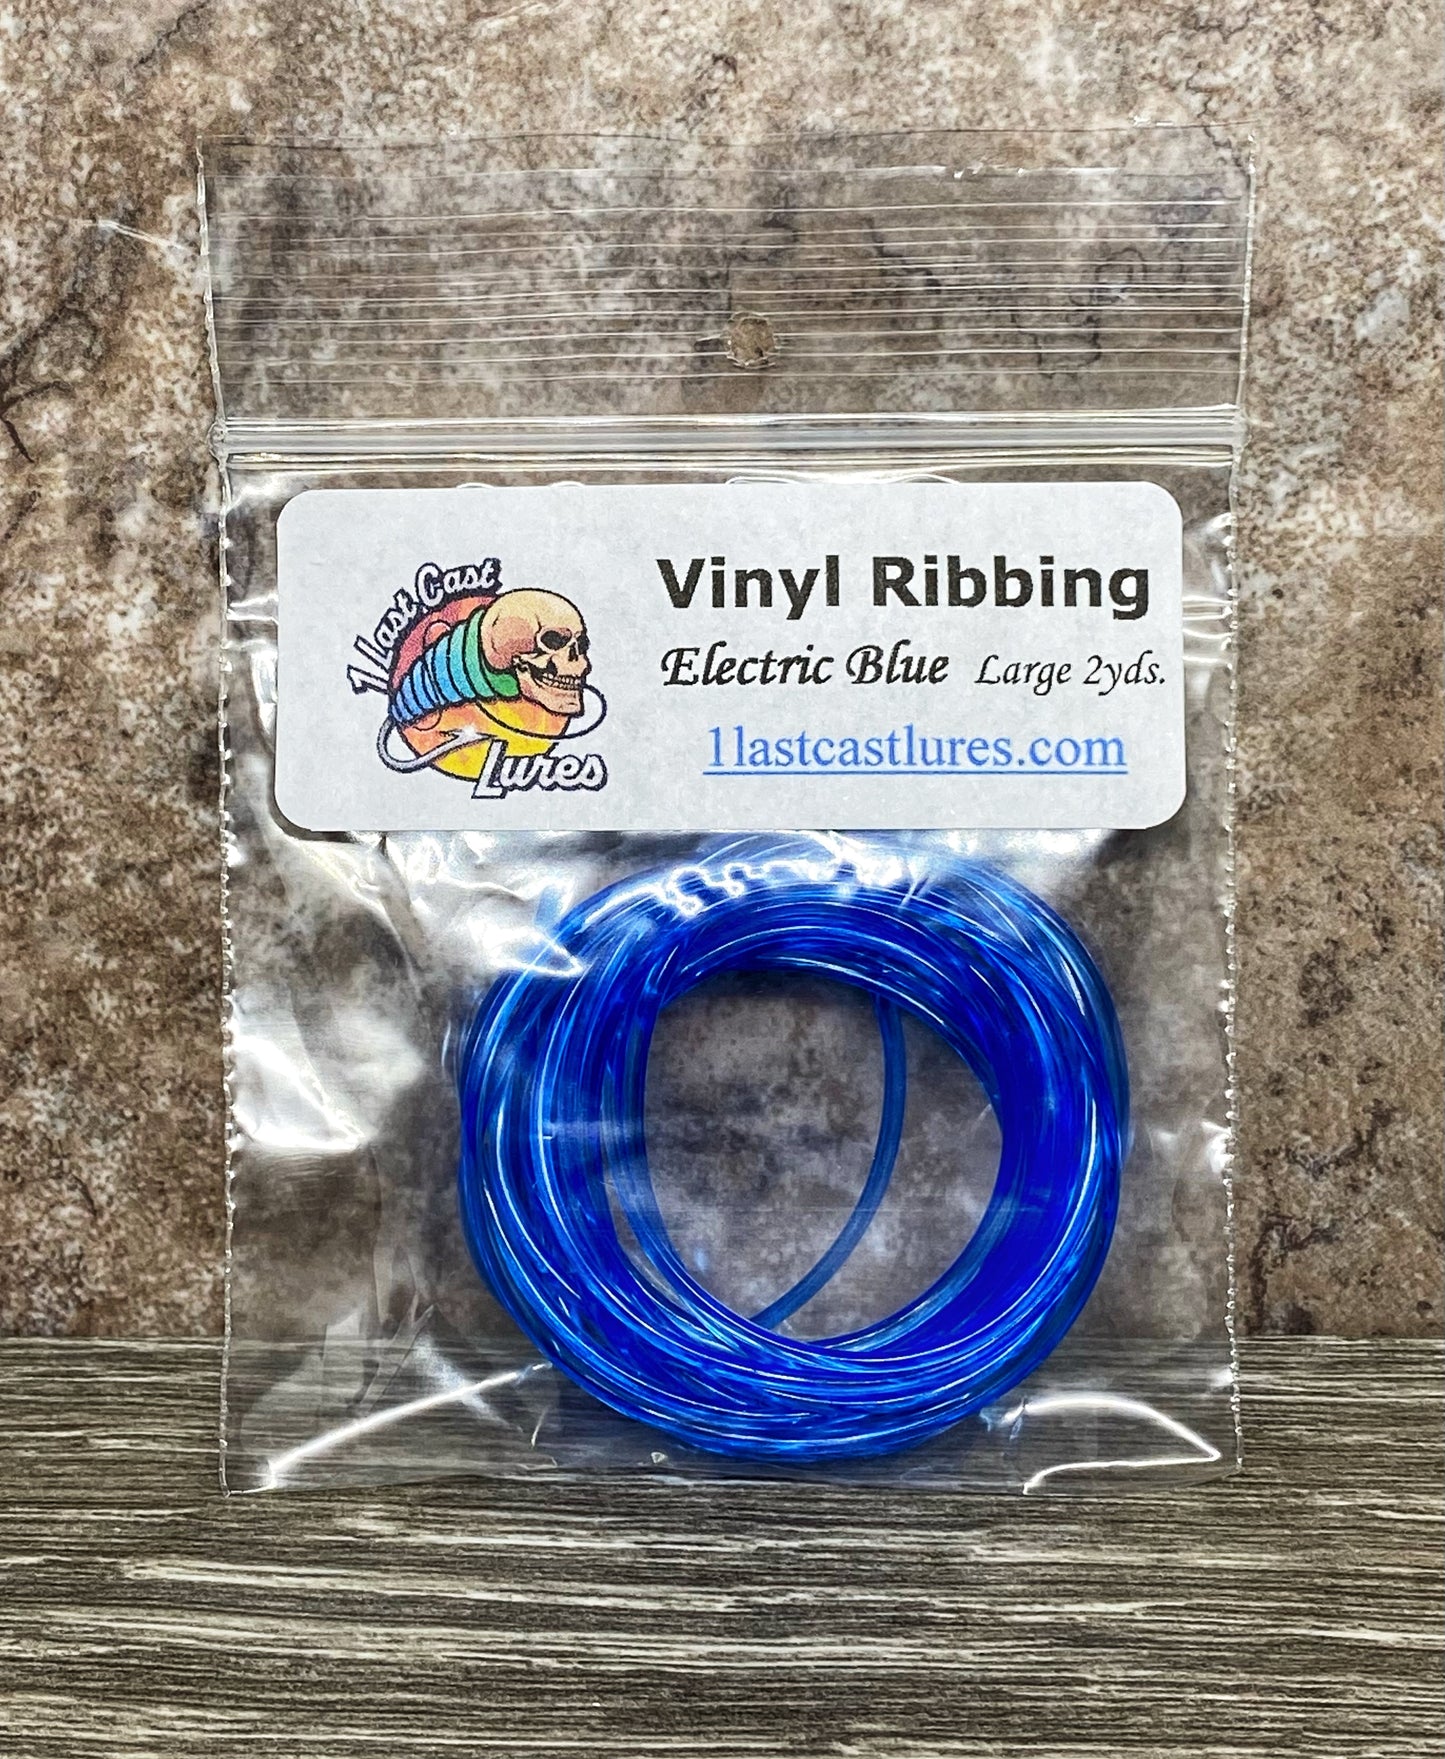 Electric Blue Large Vinyl Ribbing